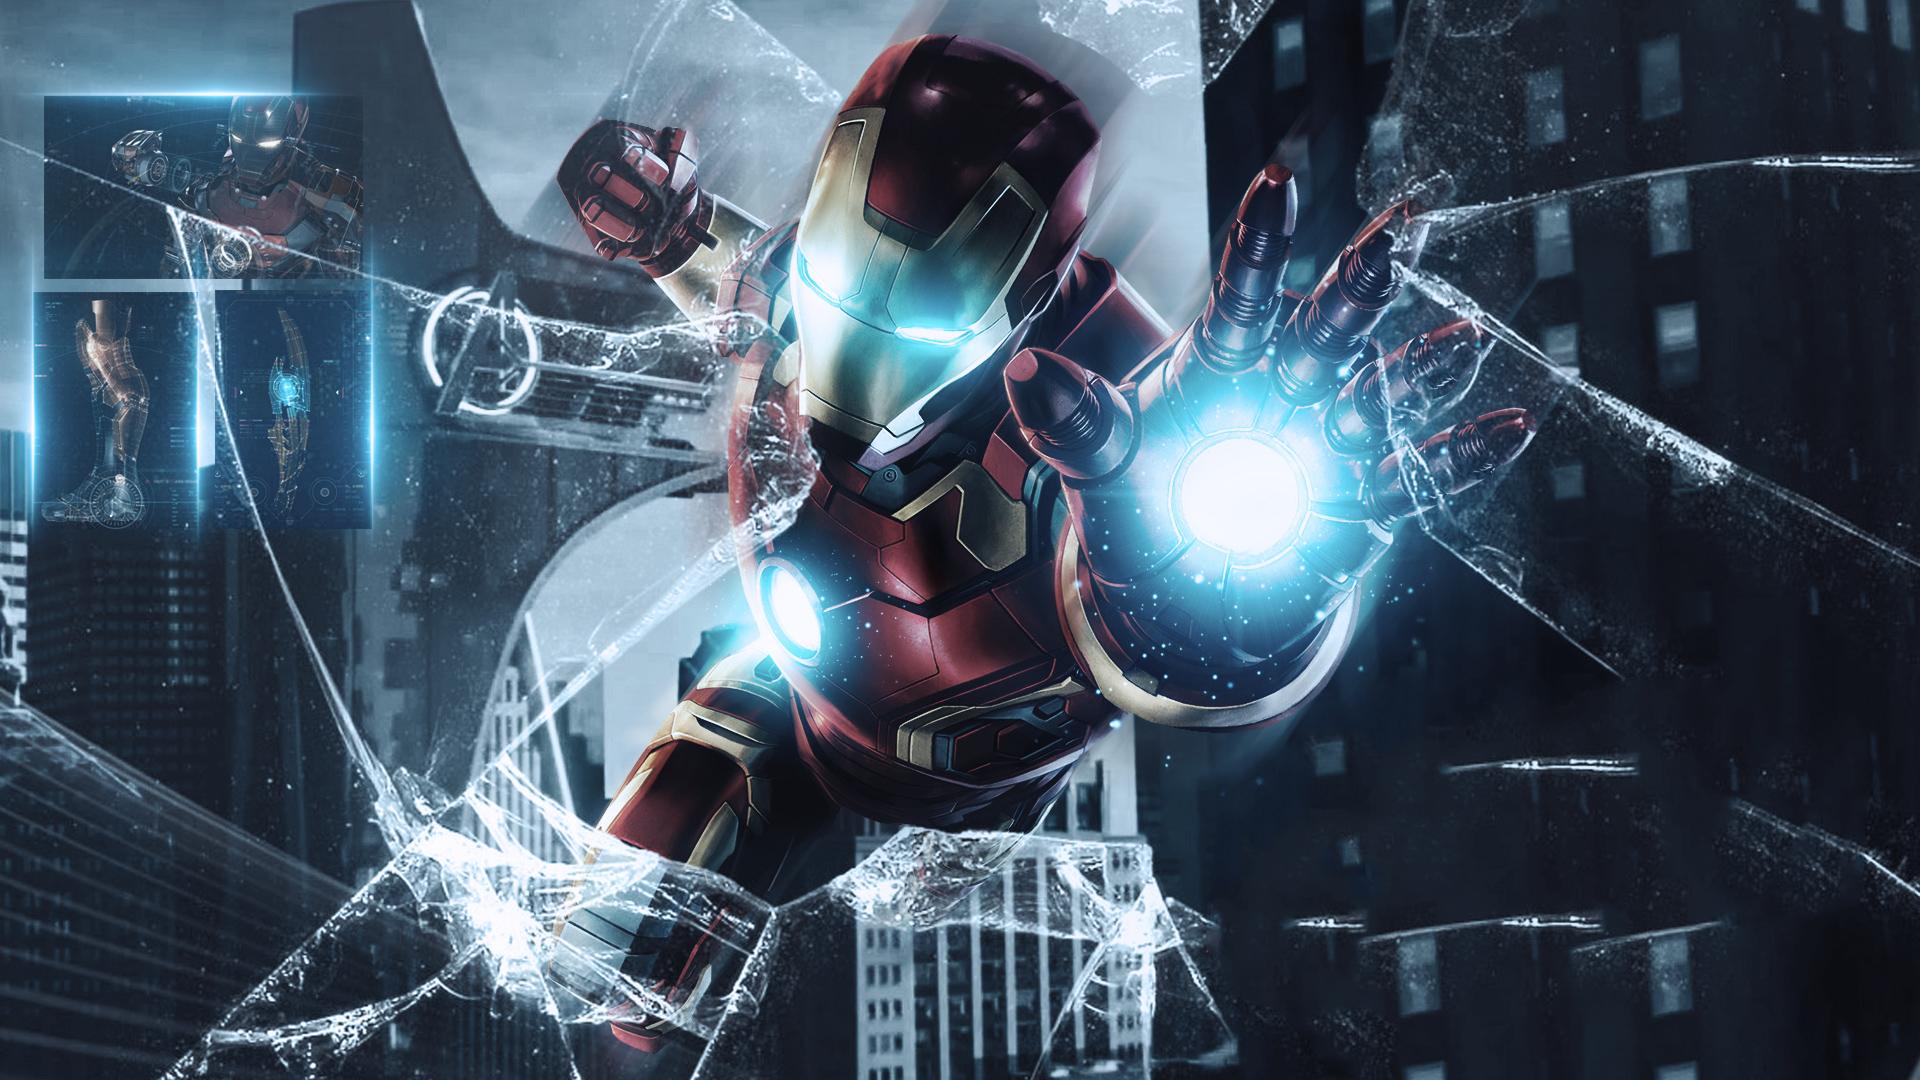 Iron Man Avengers Endgame Poster, HD Superheroes, 4k Wallpaper